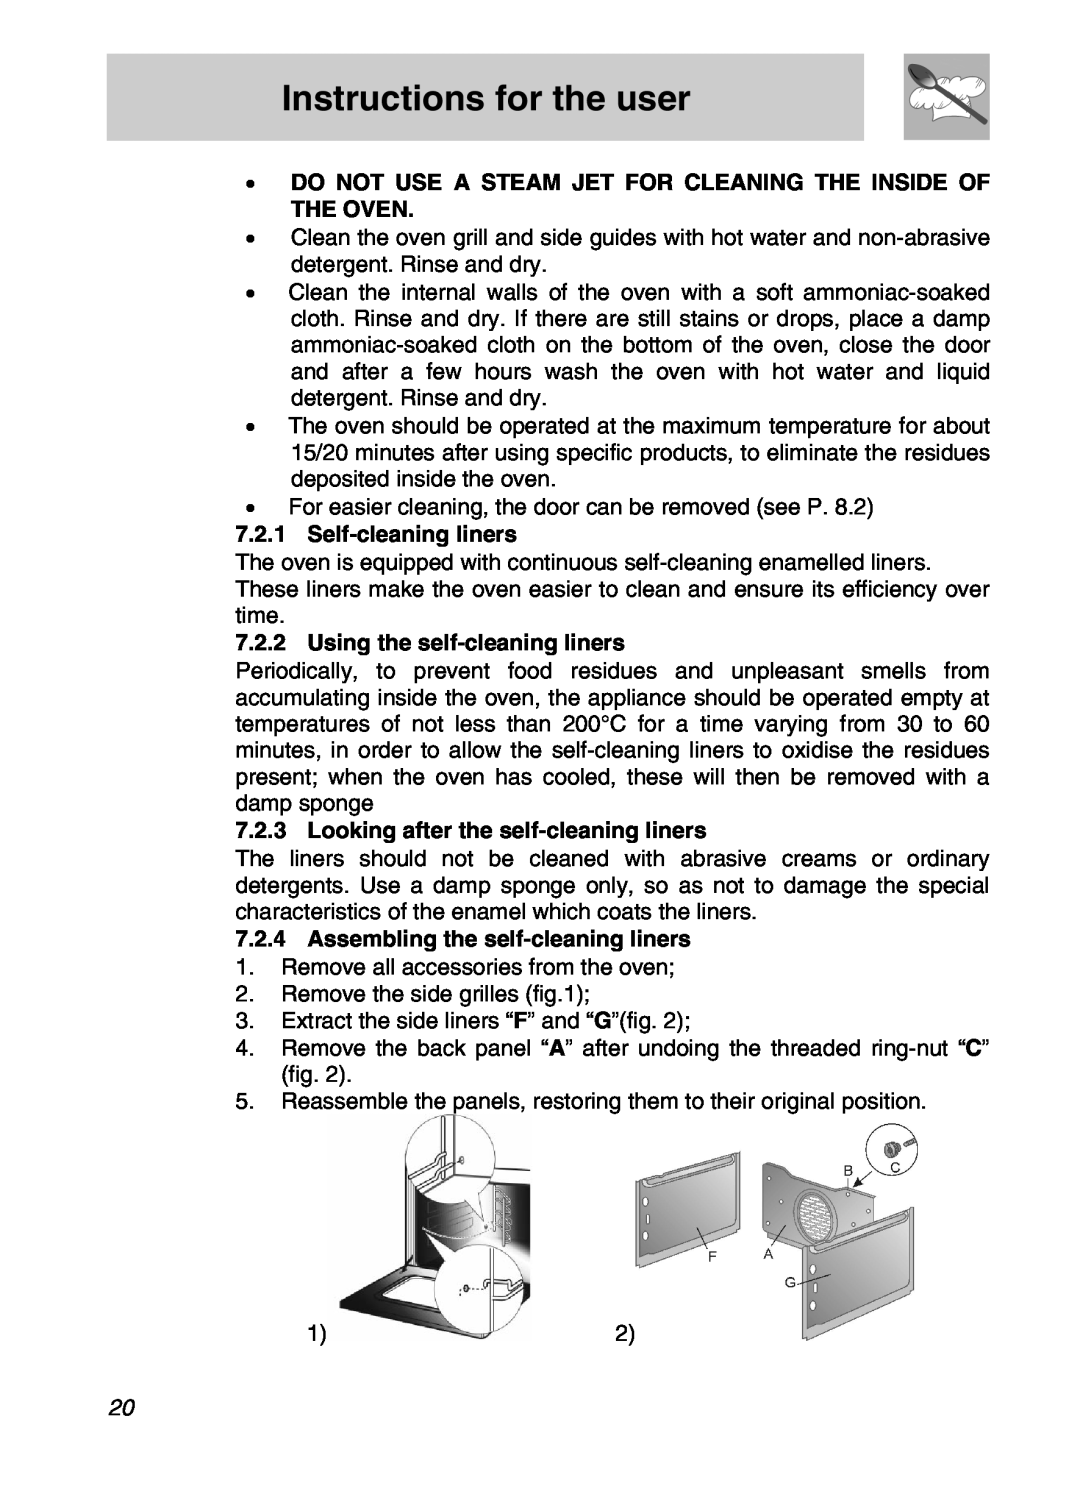 Smeg SA301X manual Instructions for the user, Self-cleaningliners, Using the self-cleaningliners 